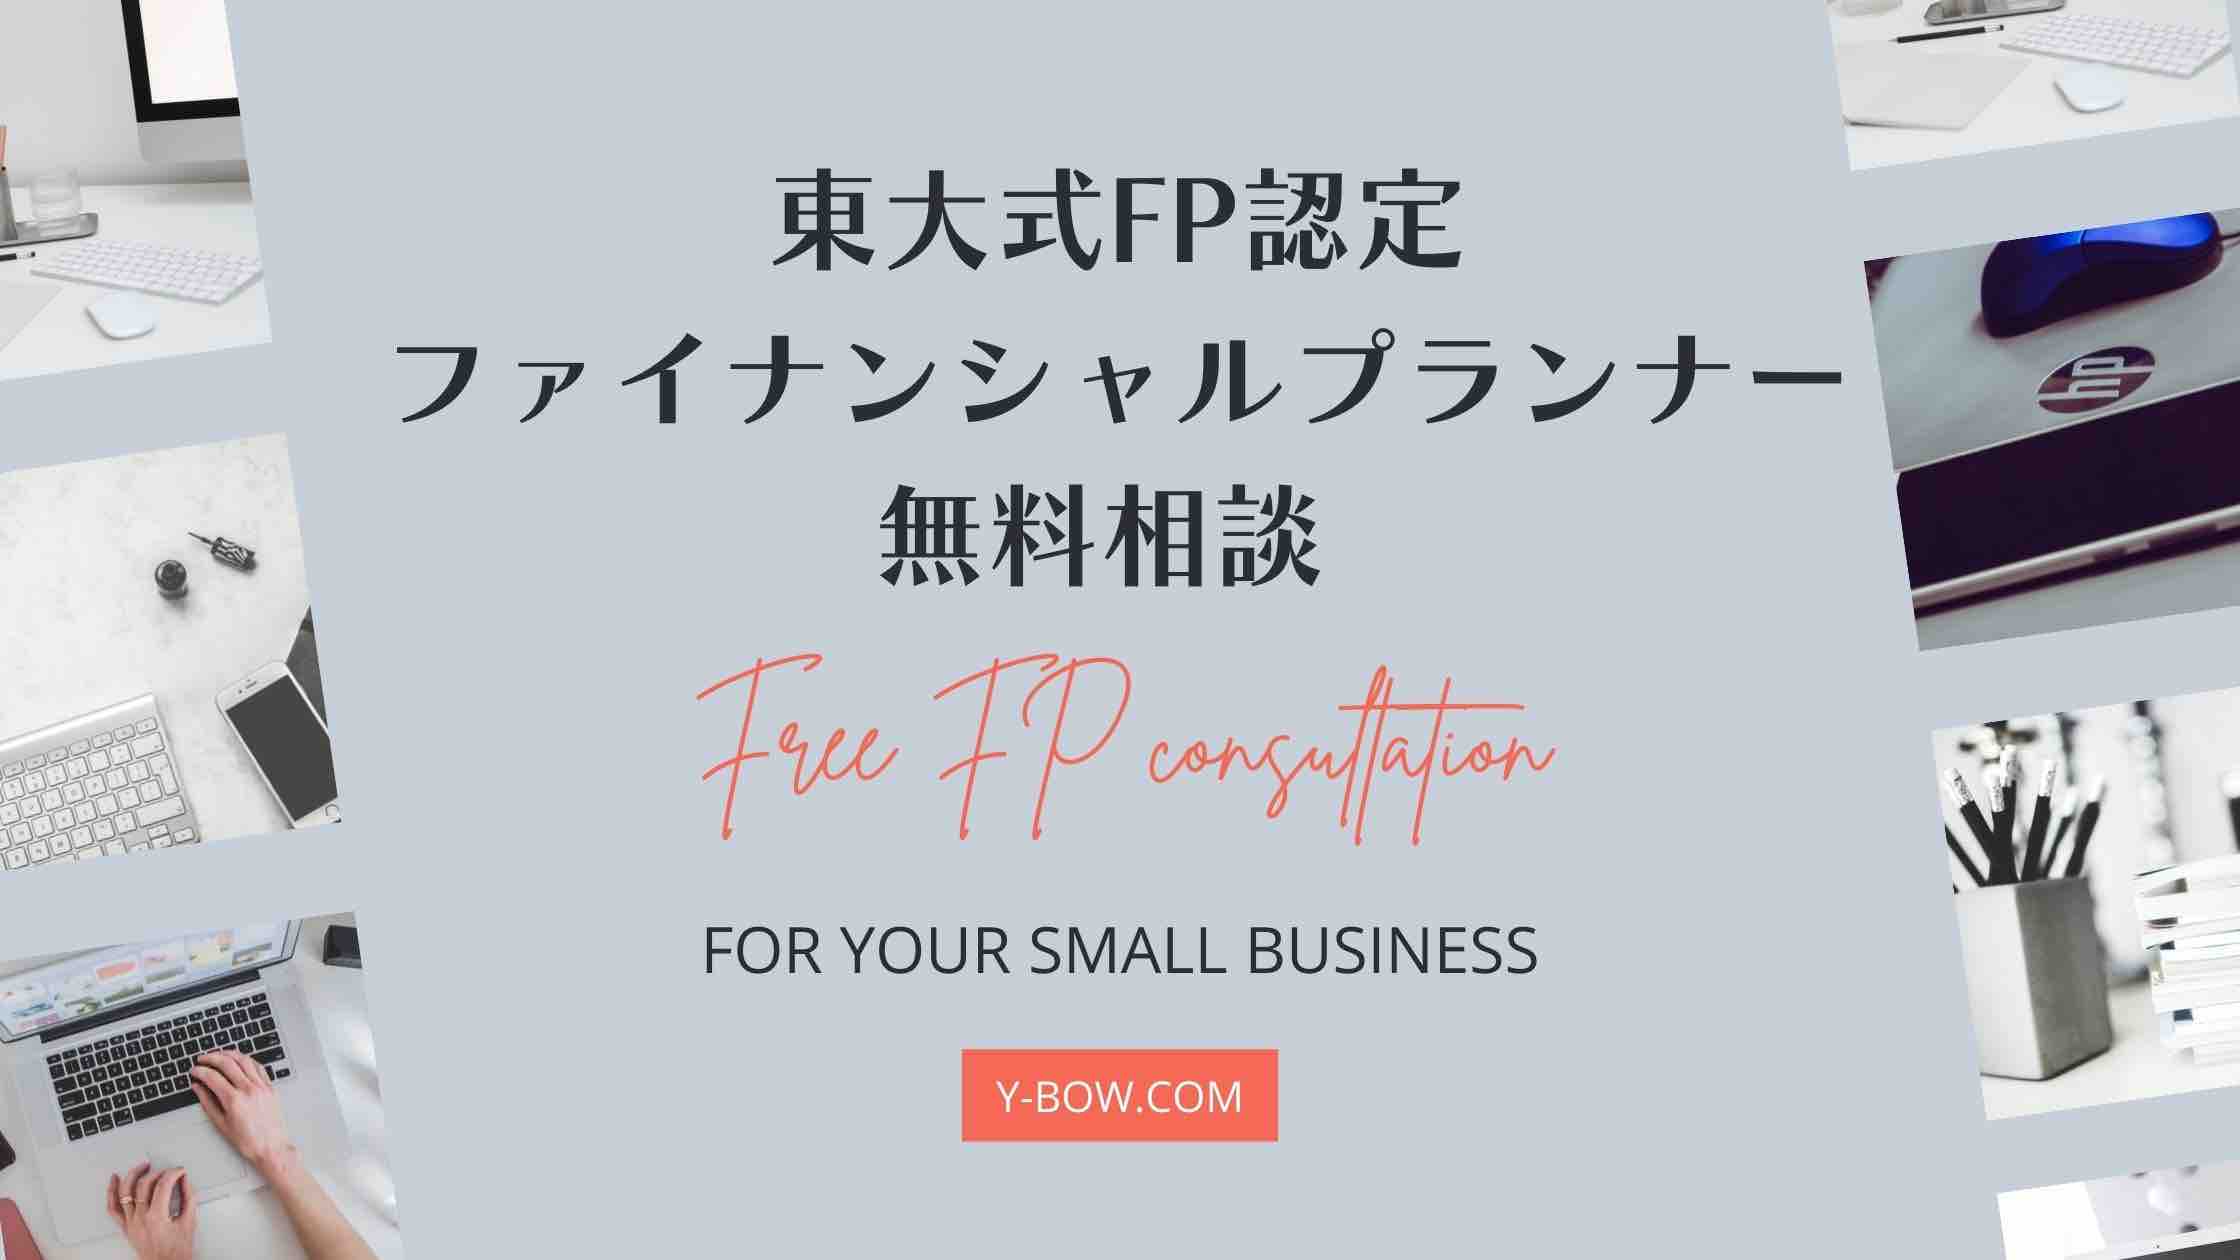 todai-fp-free-consultation